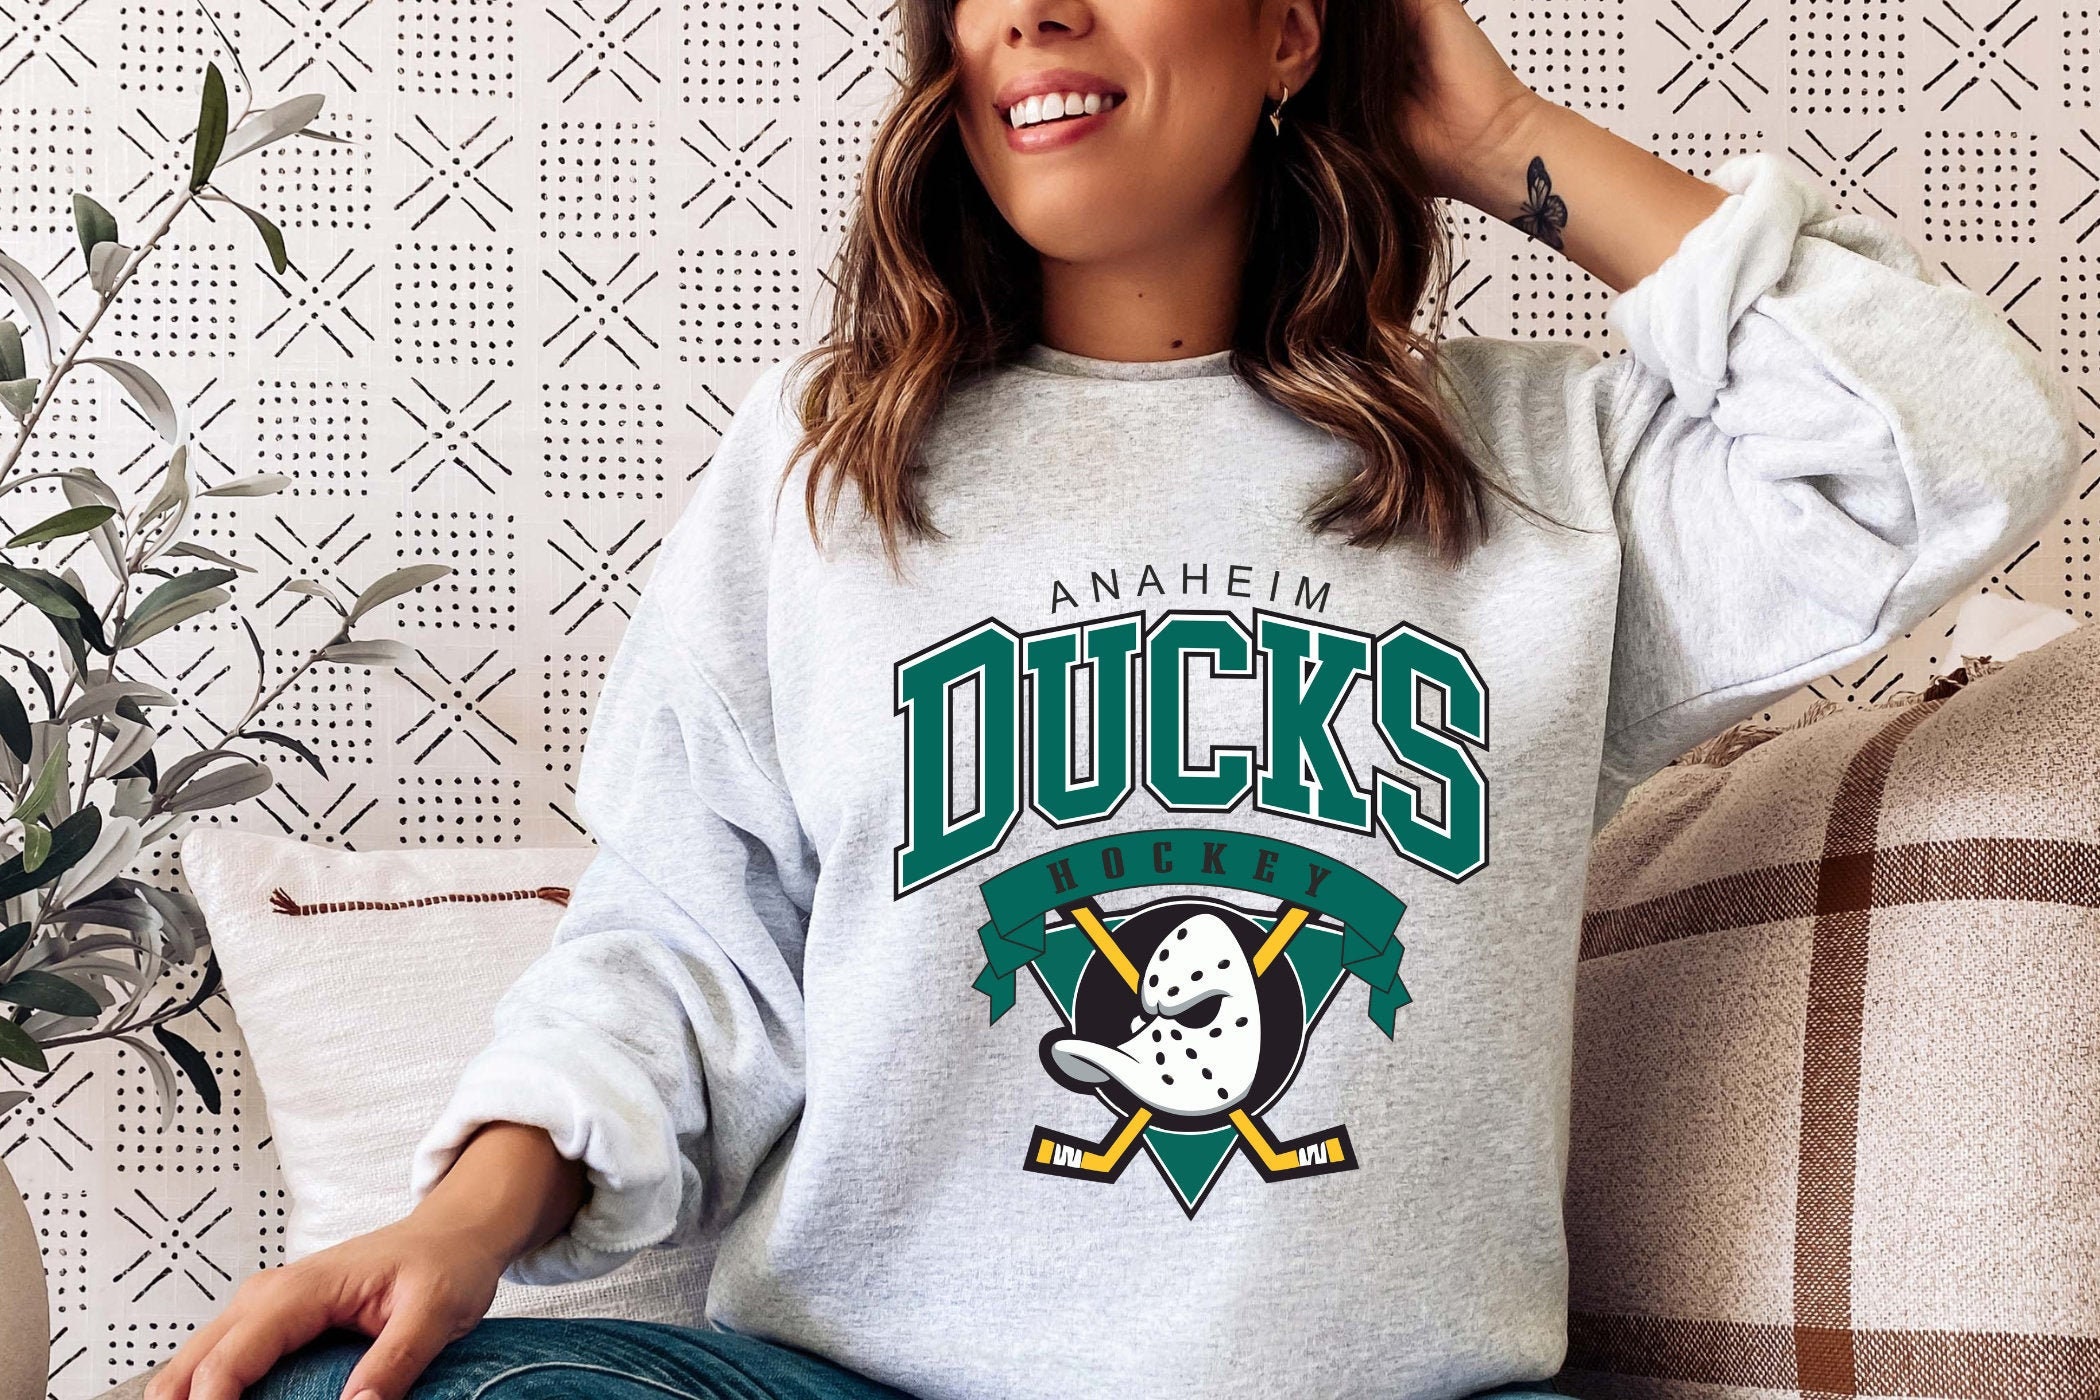 Mighty Ducks Sweatshirt Free Shipping - The Vintage Twin